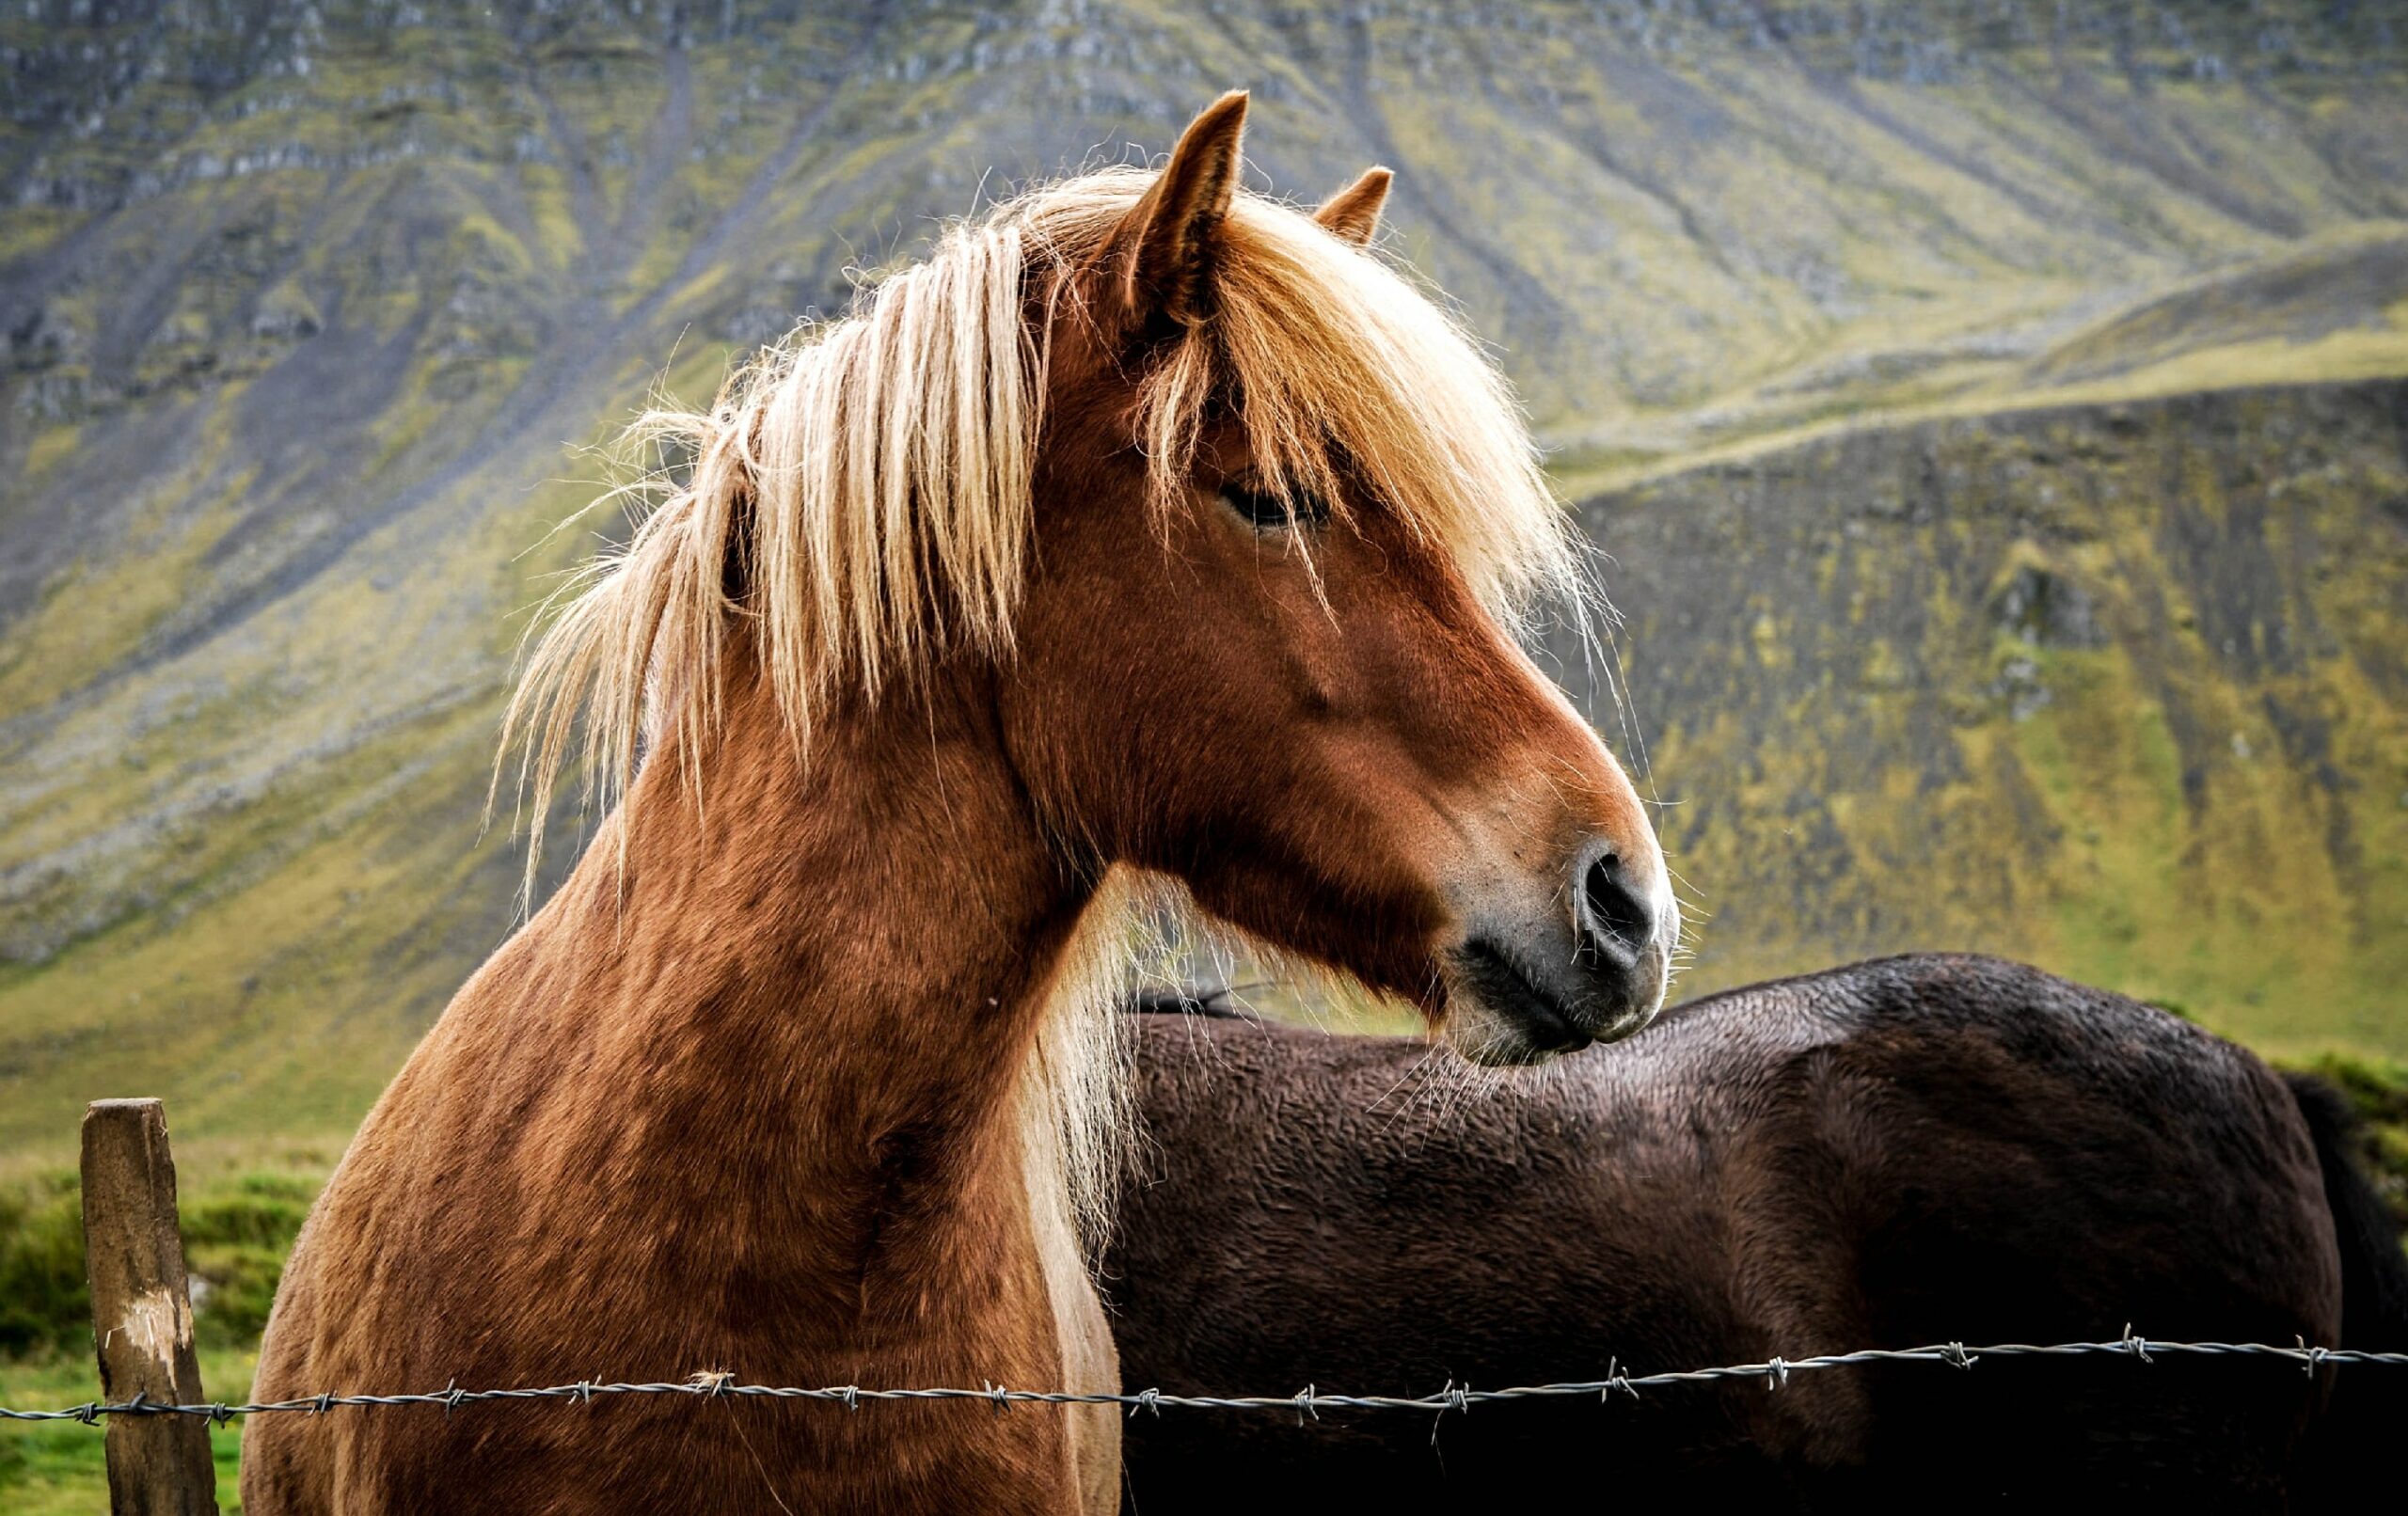 Papel de Parede e Wallpaper de cavalos bonitos